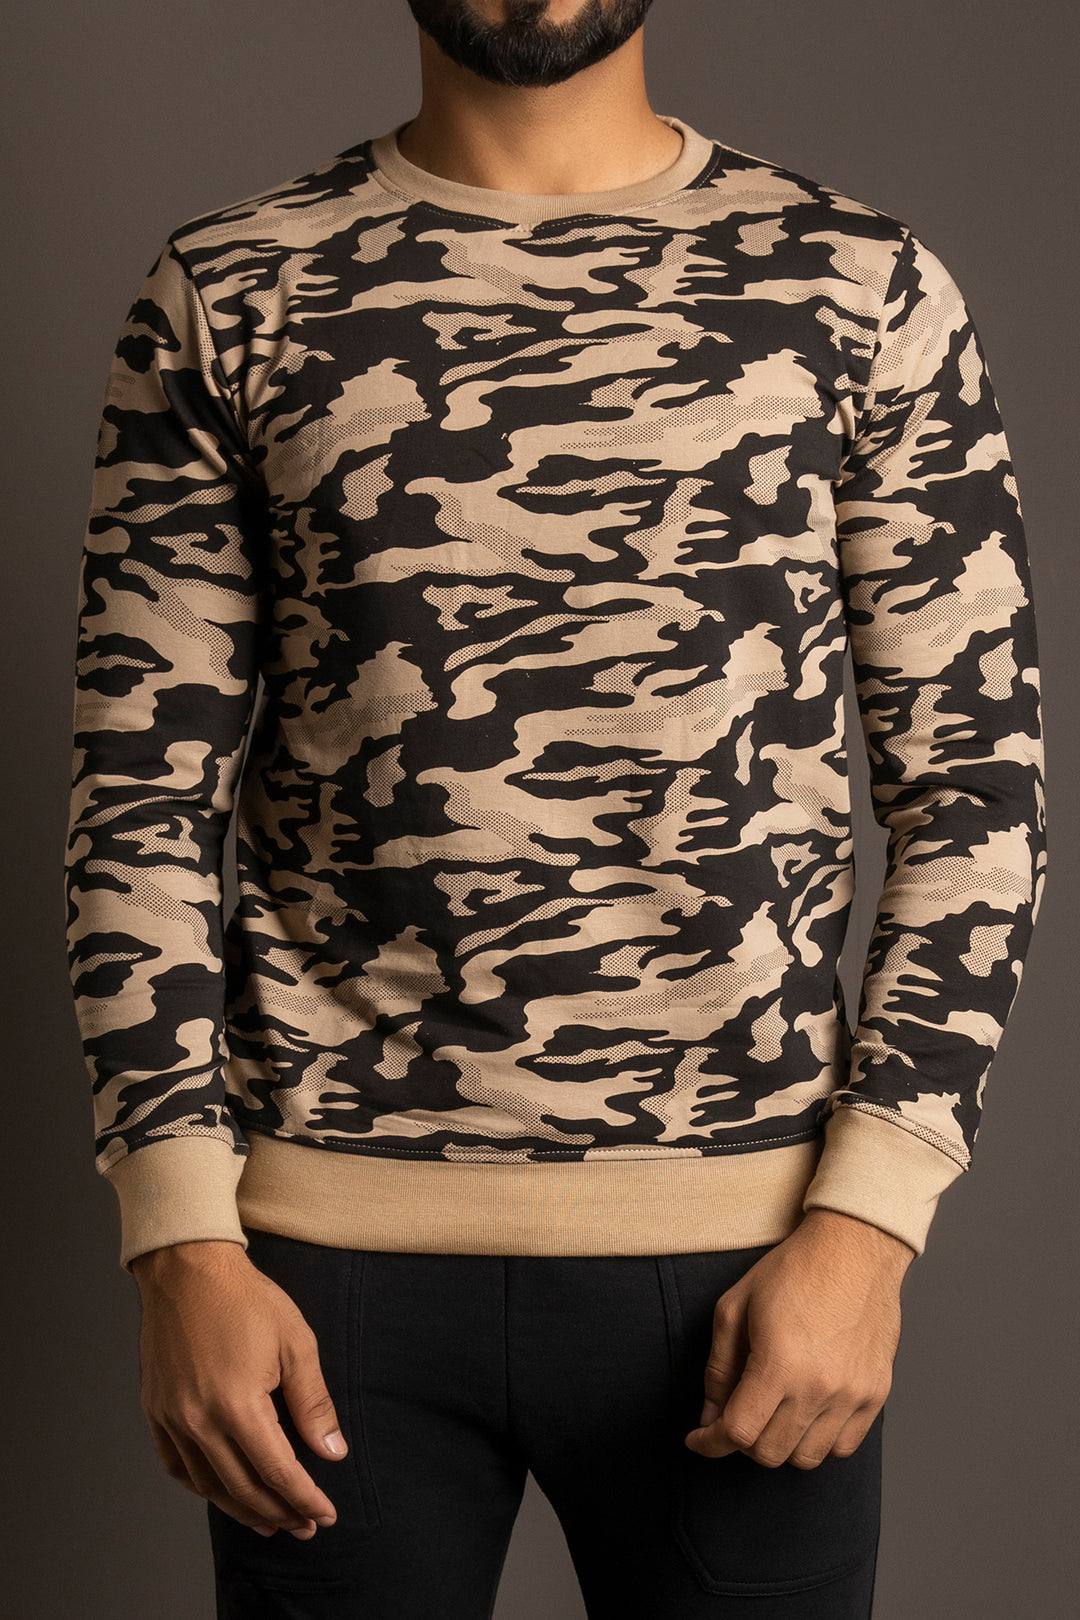 Black Camo SCLO Sweatshirt - W23 - MSW085R